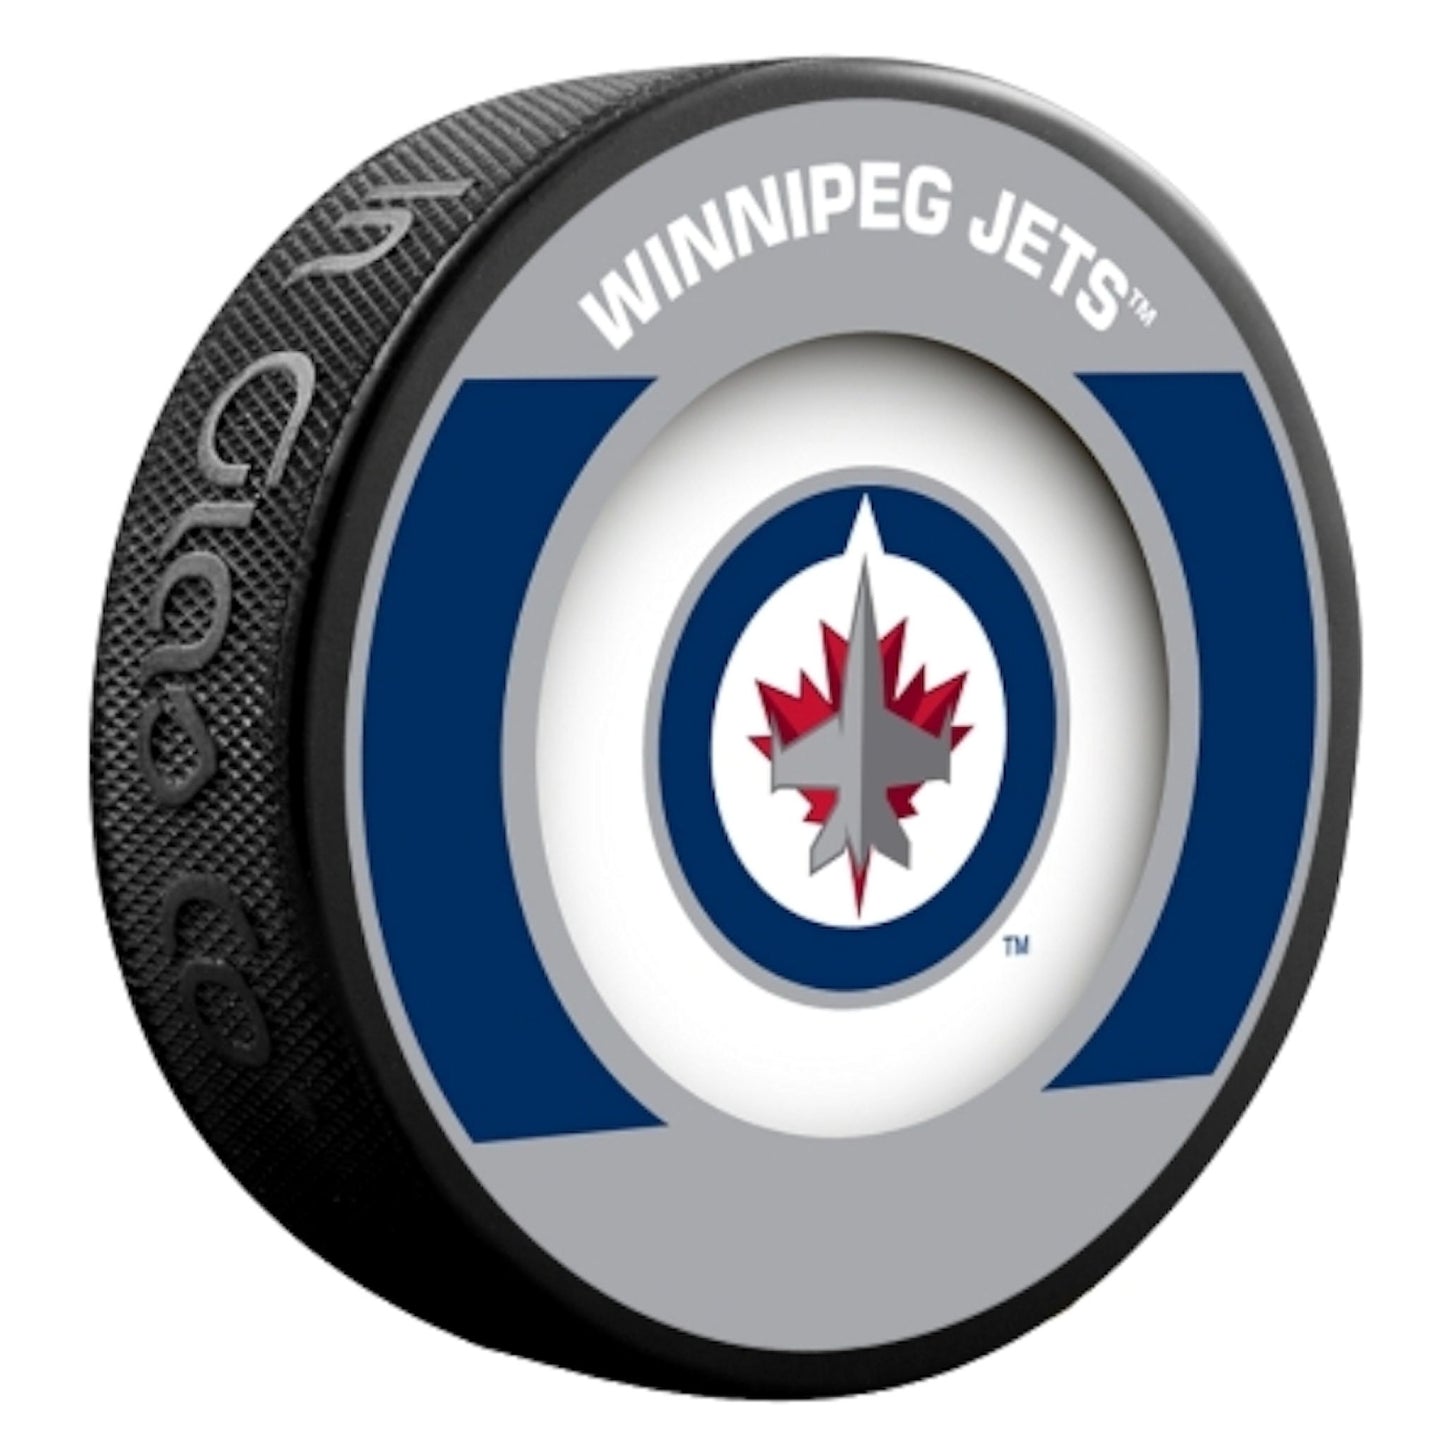 Winnipeg Jets Retro Series Collectible Hockey Puck